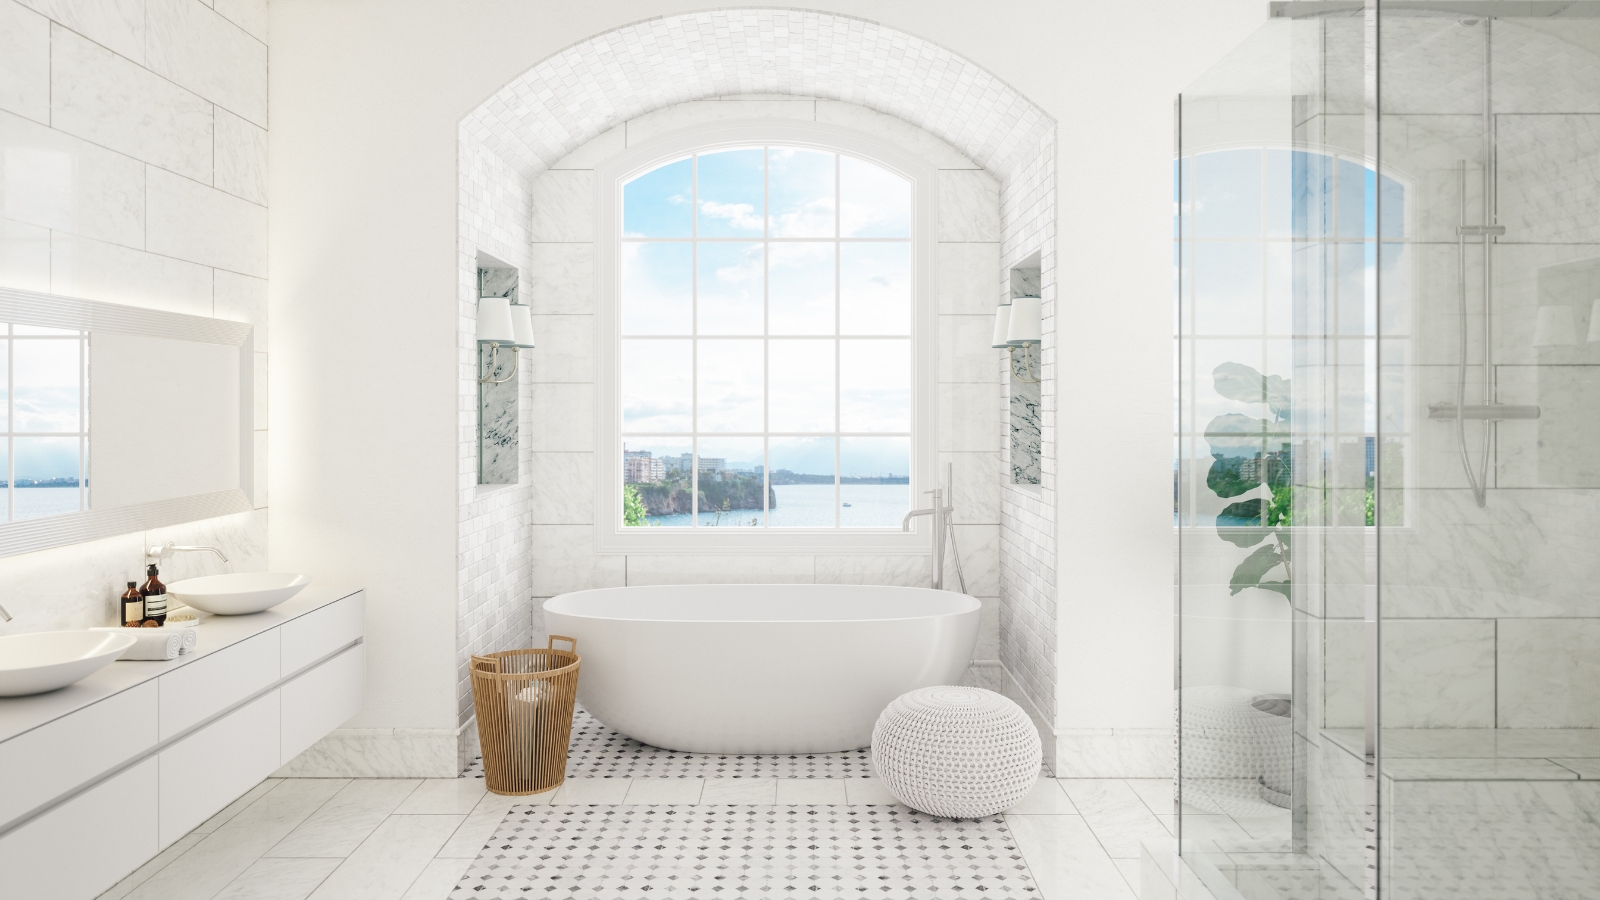 Bathroom renovator that does beach or coastal themes in white